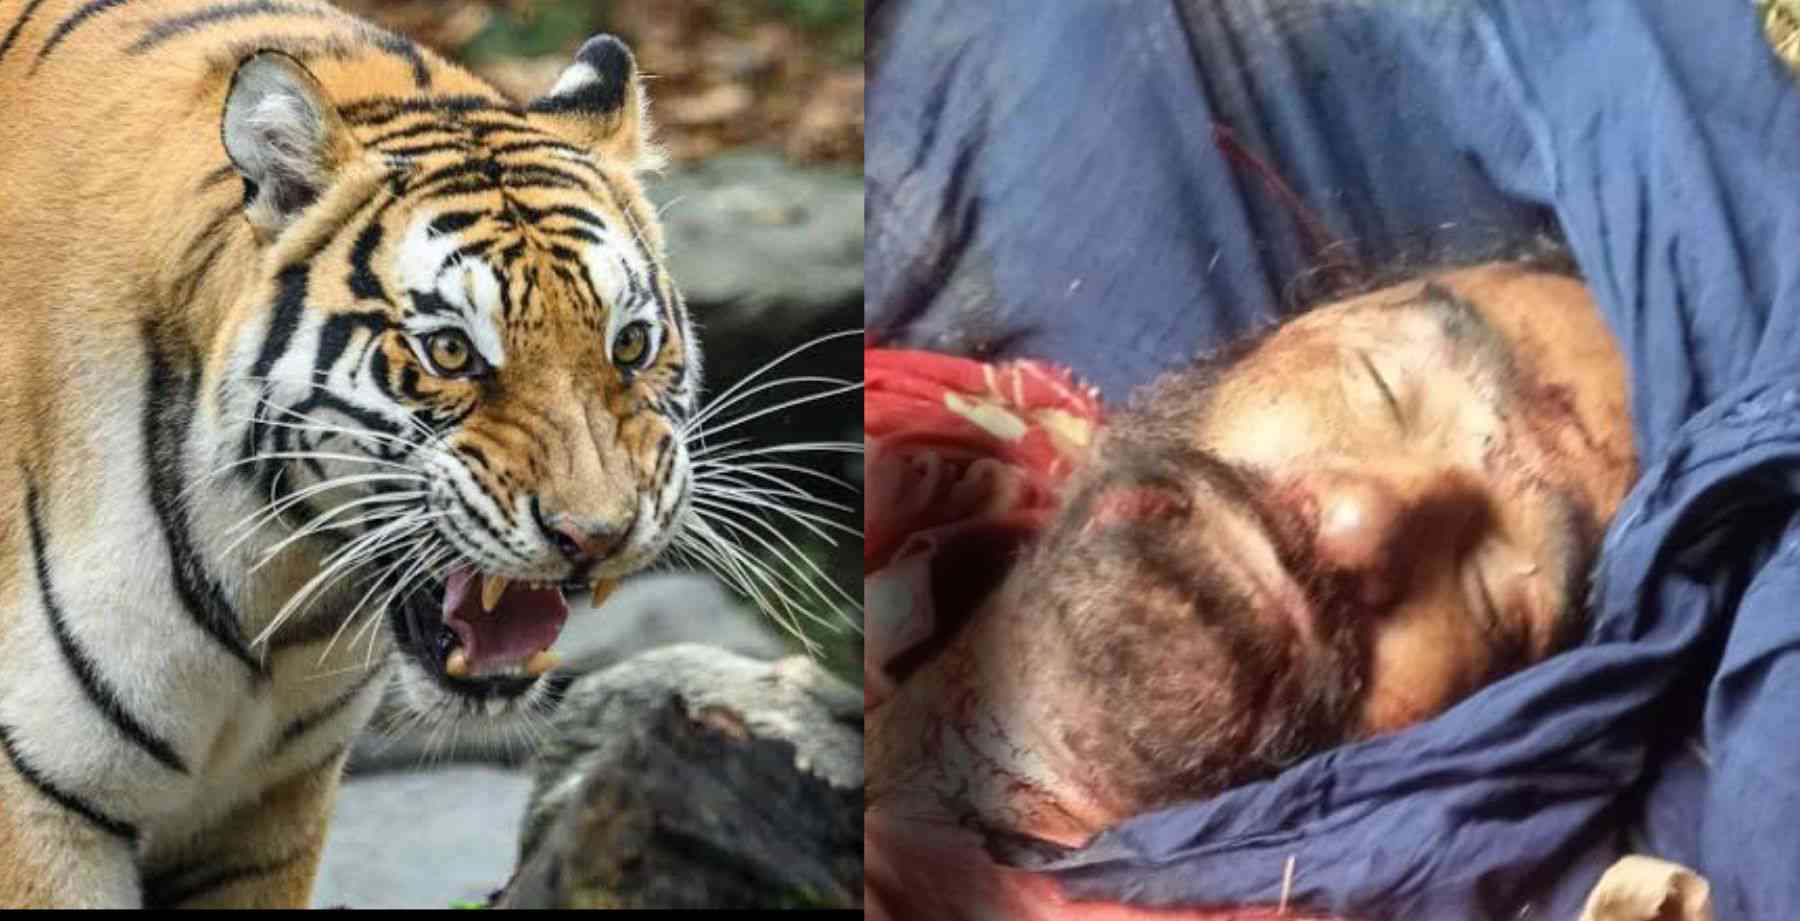 Uttarakhand news: Kewal Singh, who had gone to cut grass, was killed in tiger attack at khatima. Khatima Tiger Attack